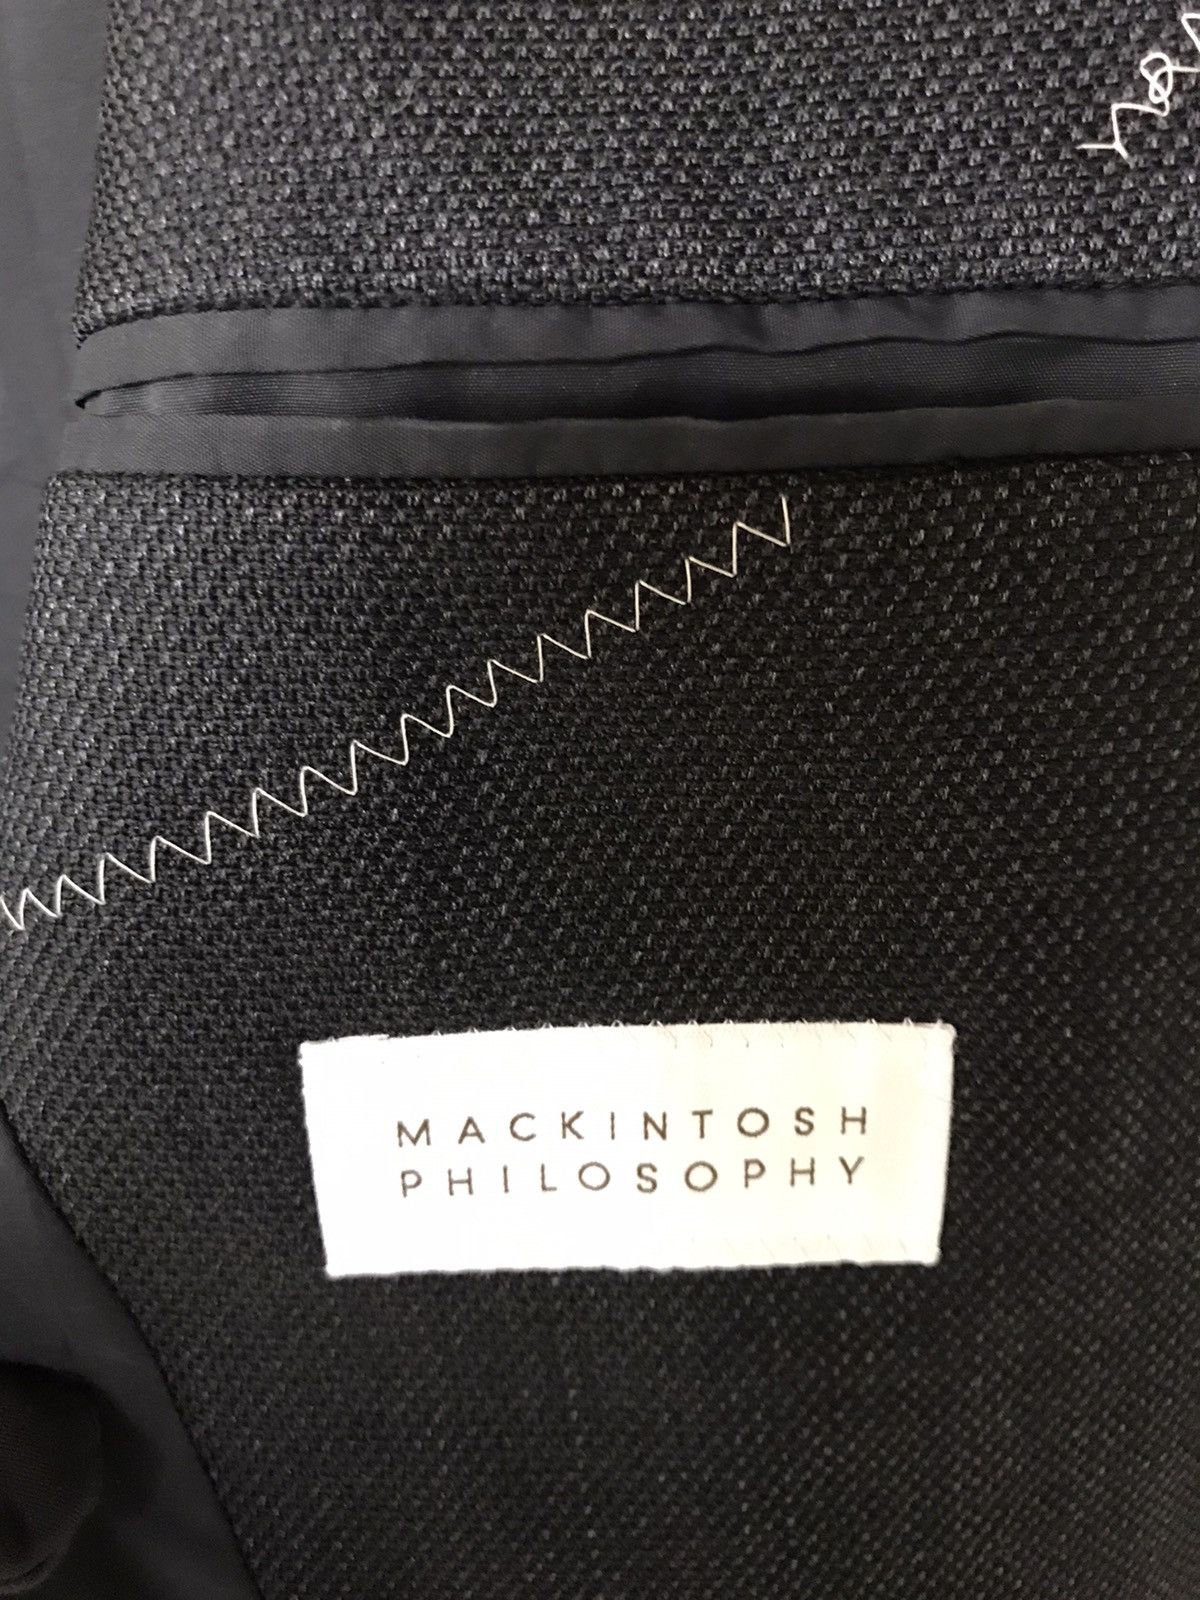 Mackintosh Philosophy Suit/Blazer - 4